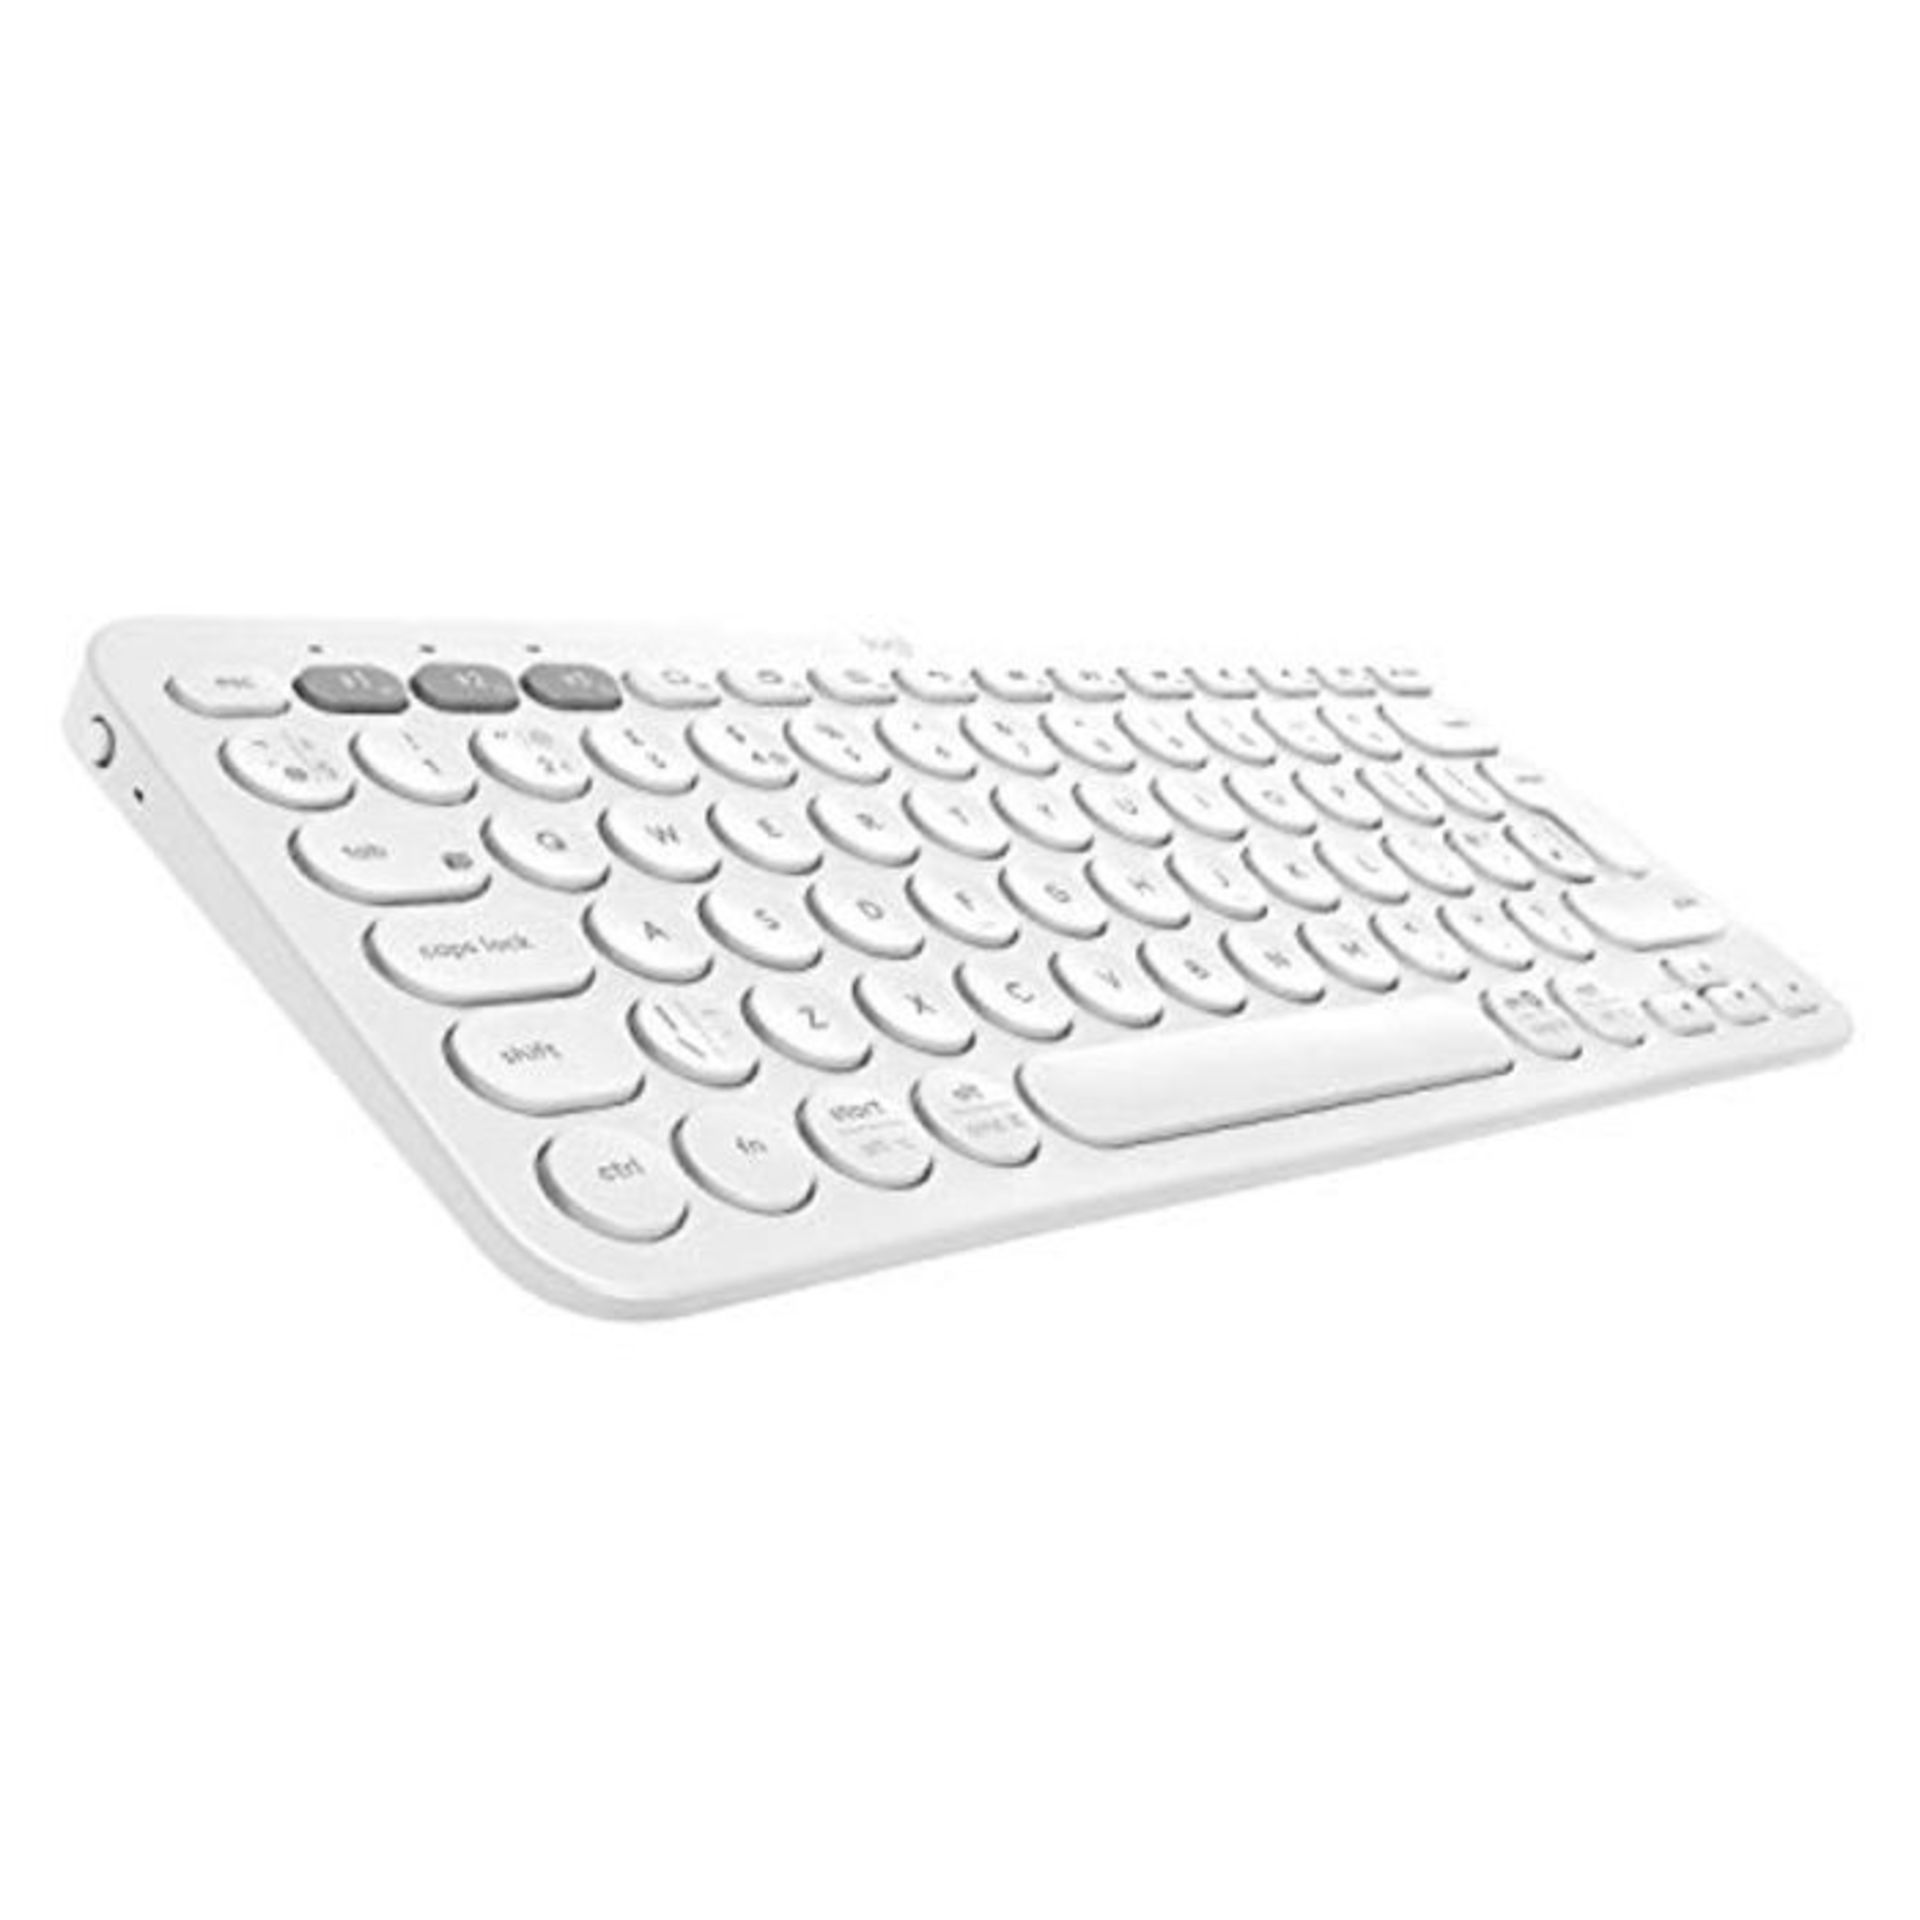 Logitech K380 Multi-Device Bluetooth Keyboard, QWERTZ German Layout - White